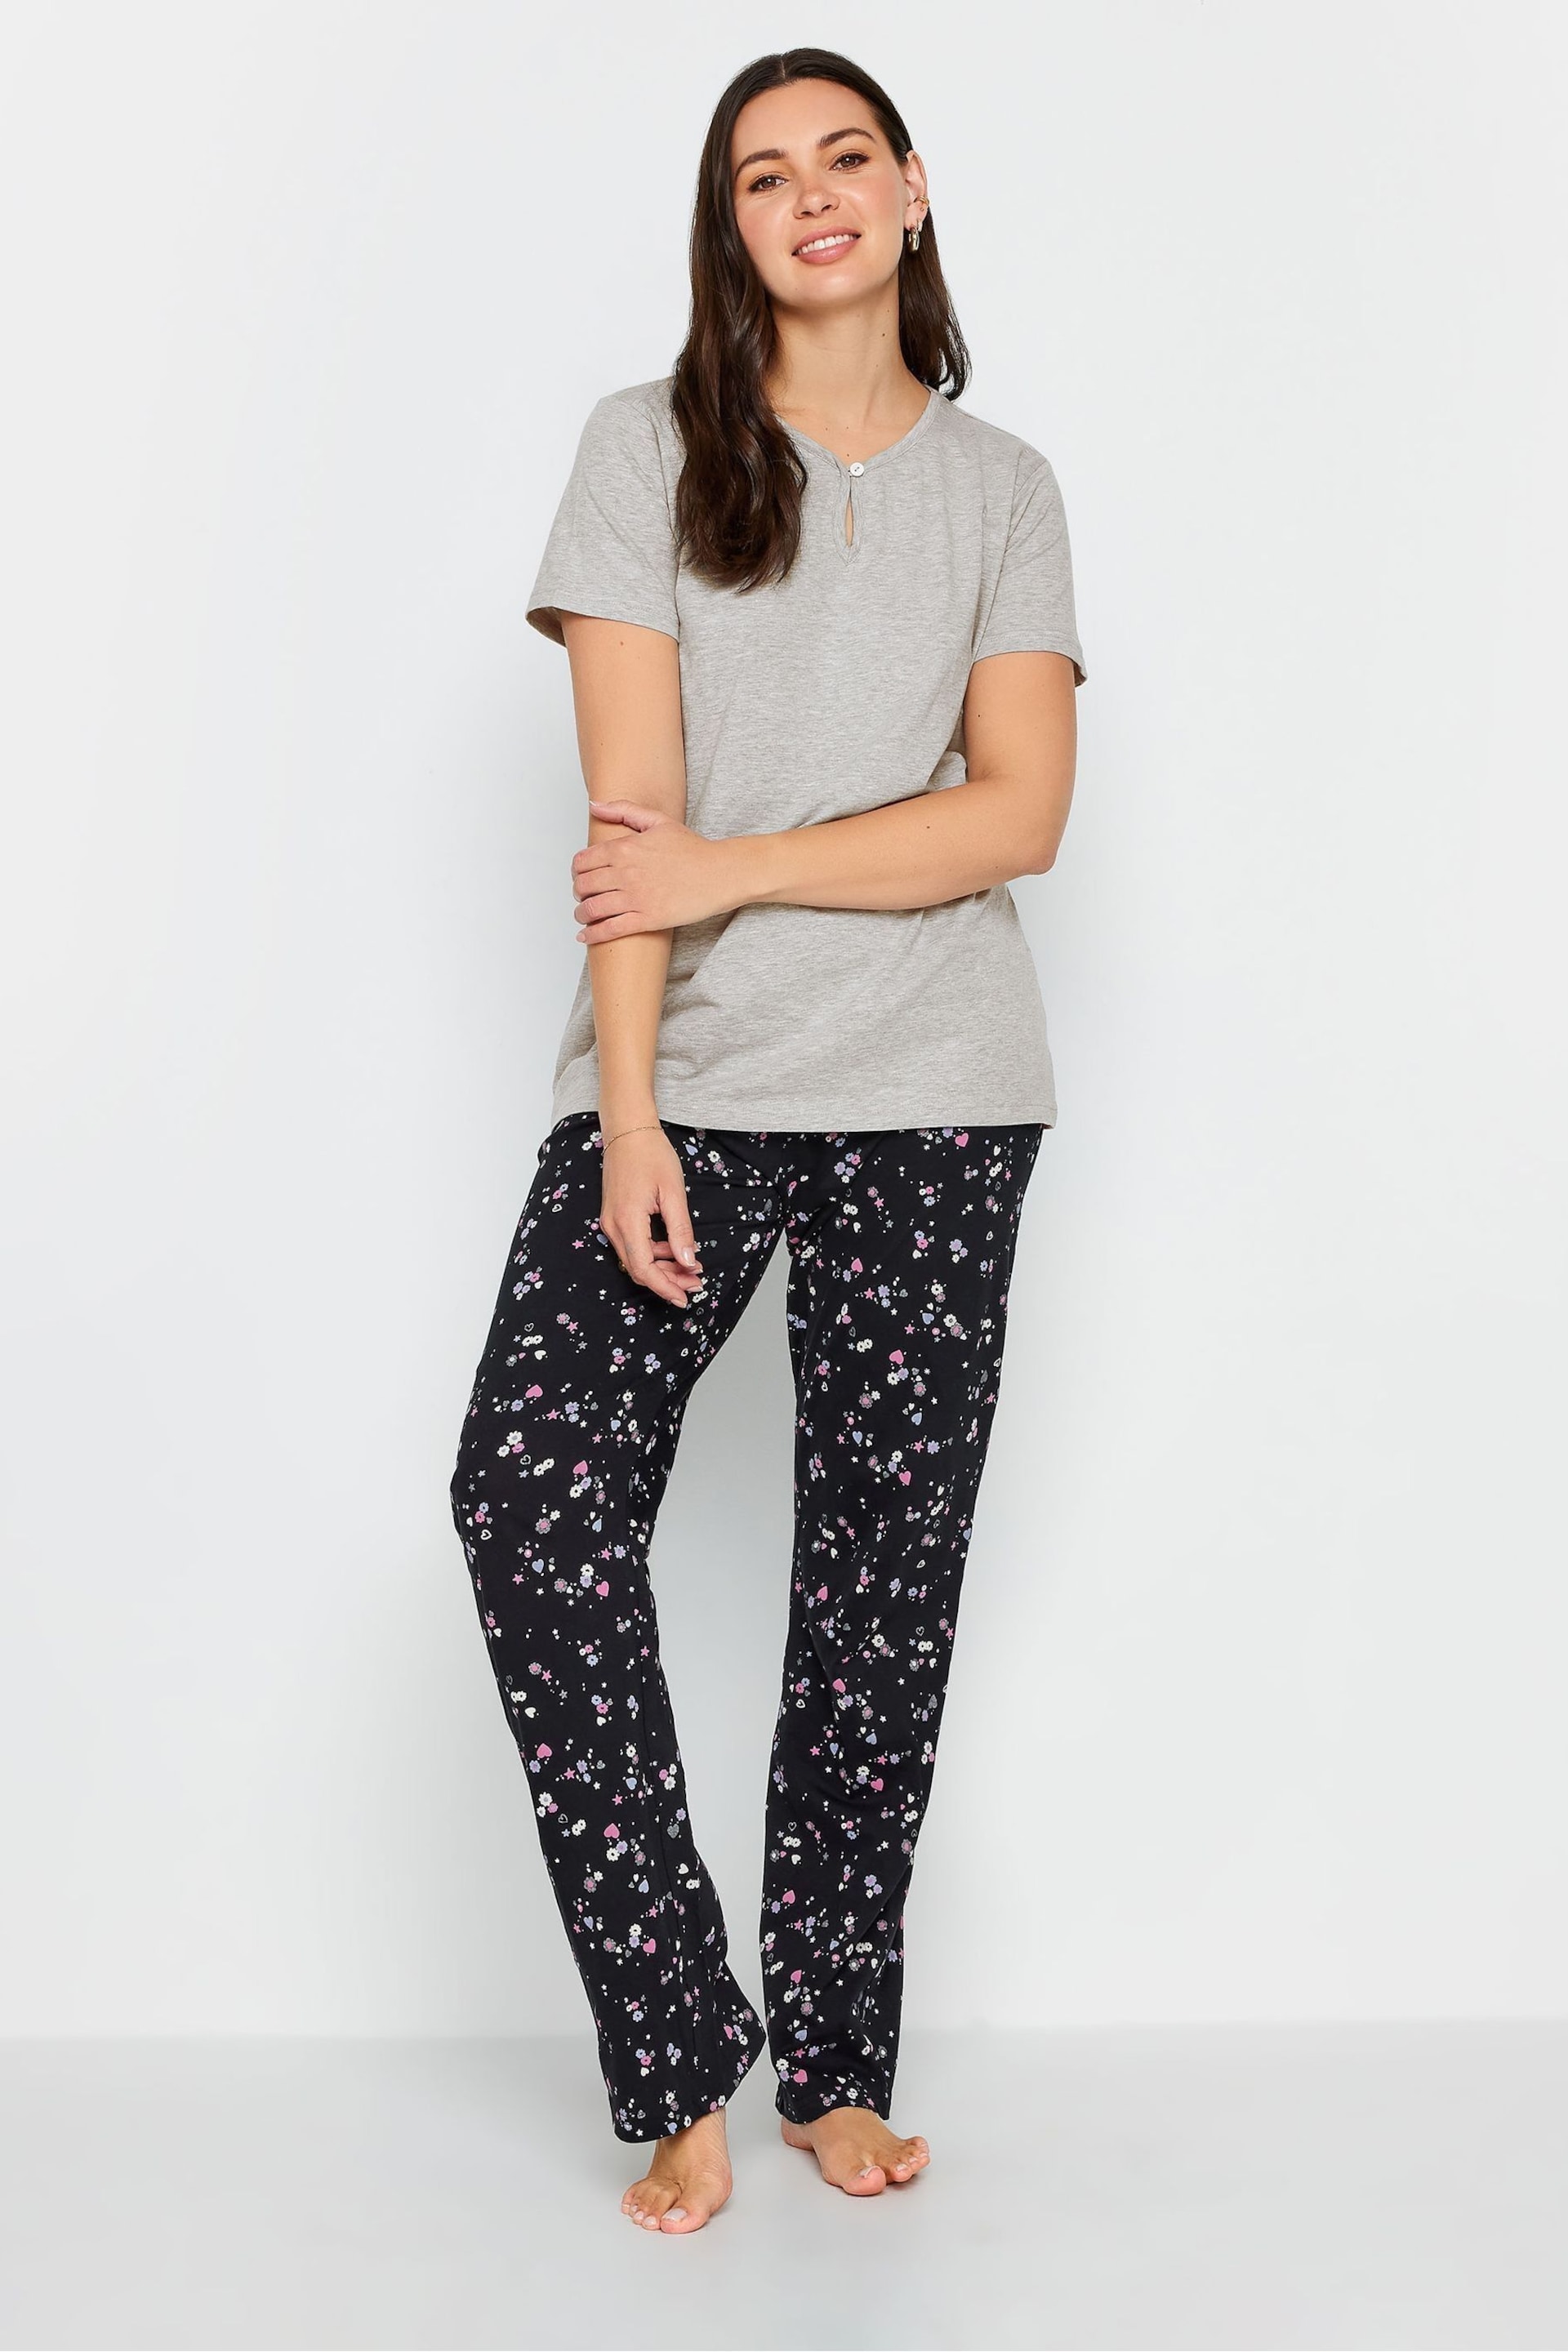 Long Tall Sally Grey Ditsy Floral Print Wide Leg Pyjama Set - Image 1 of 4